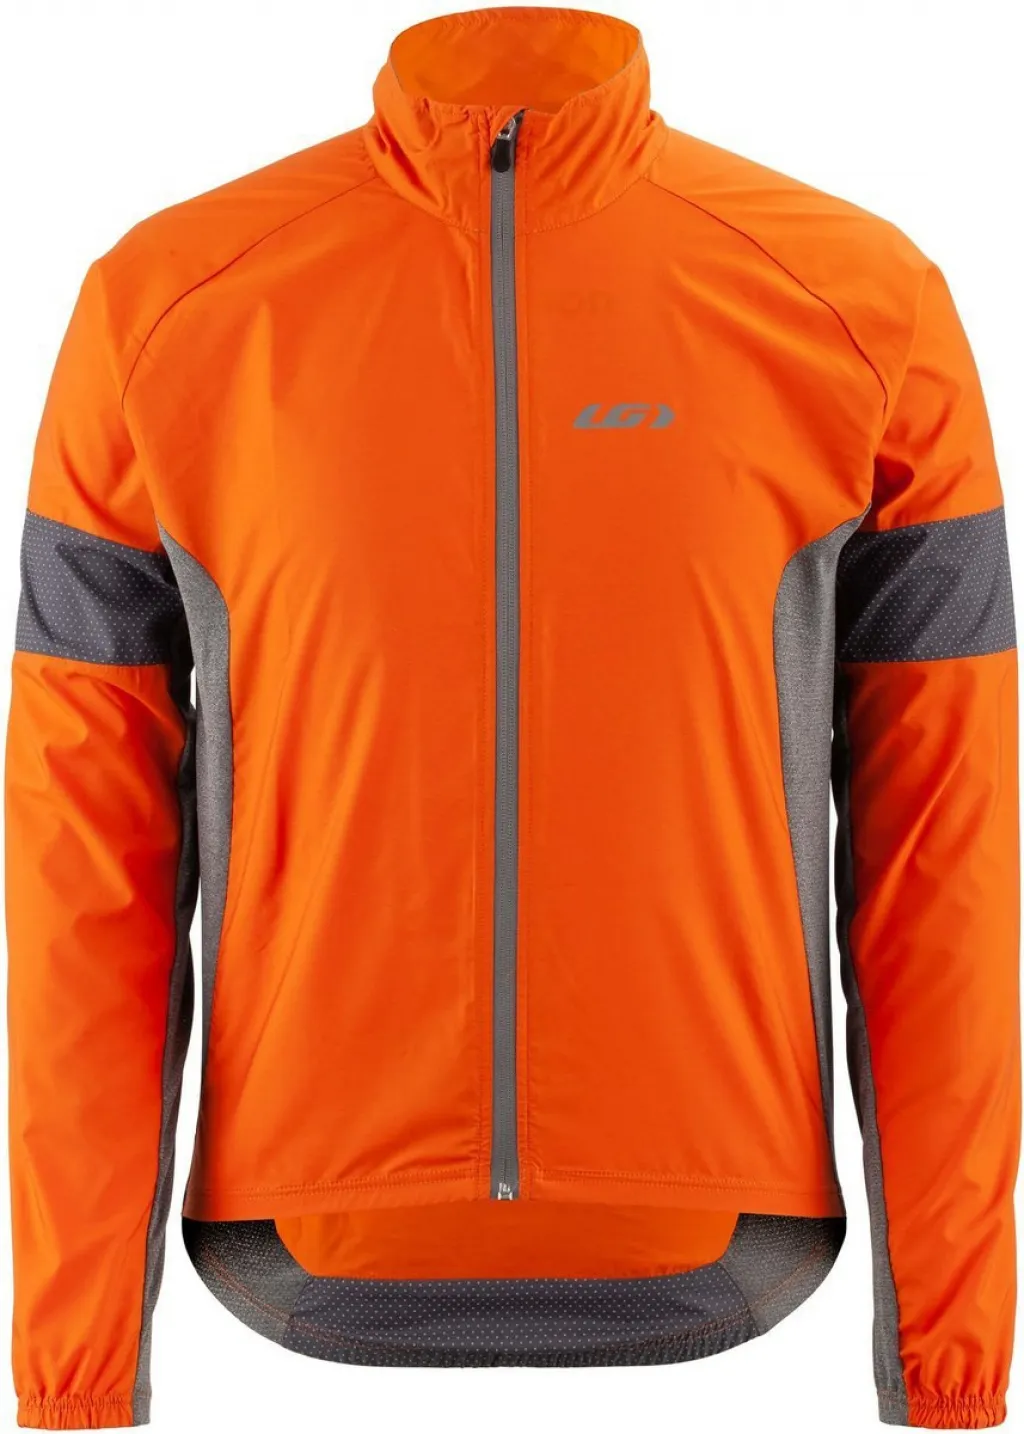 Куртка Garneau Modesto Cycling 3 Jacket помаранчево-сіра